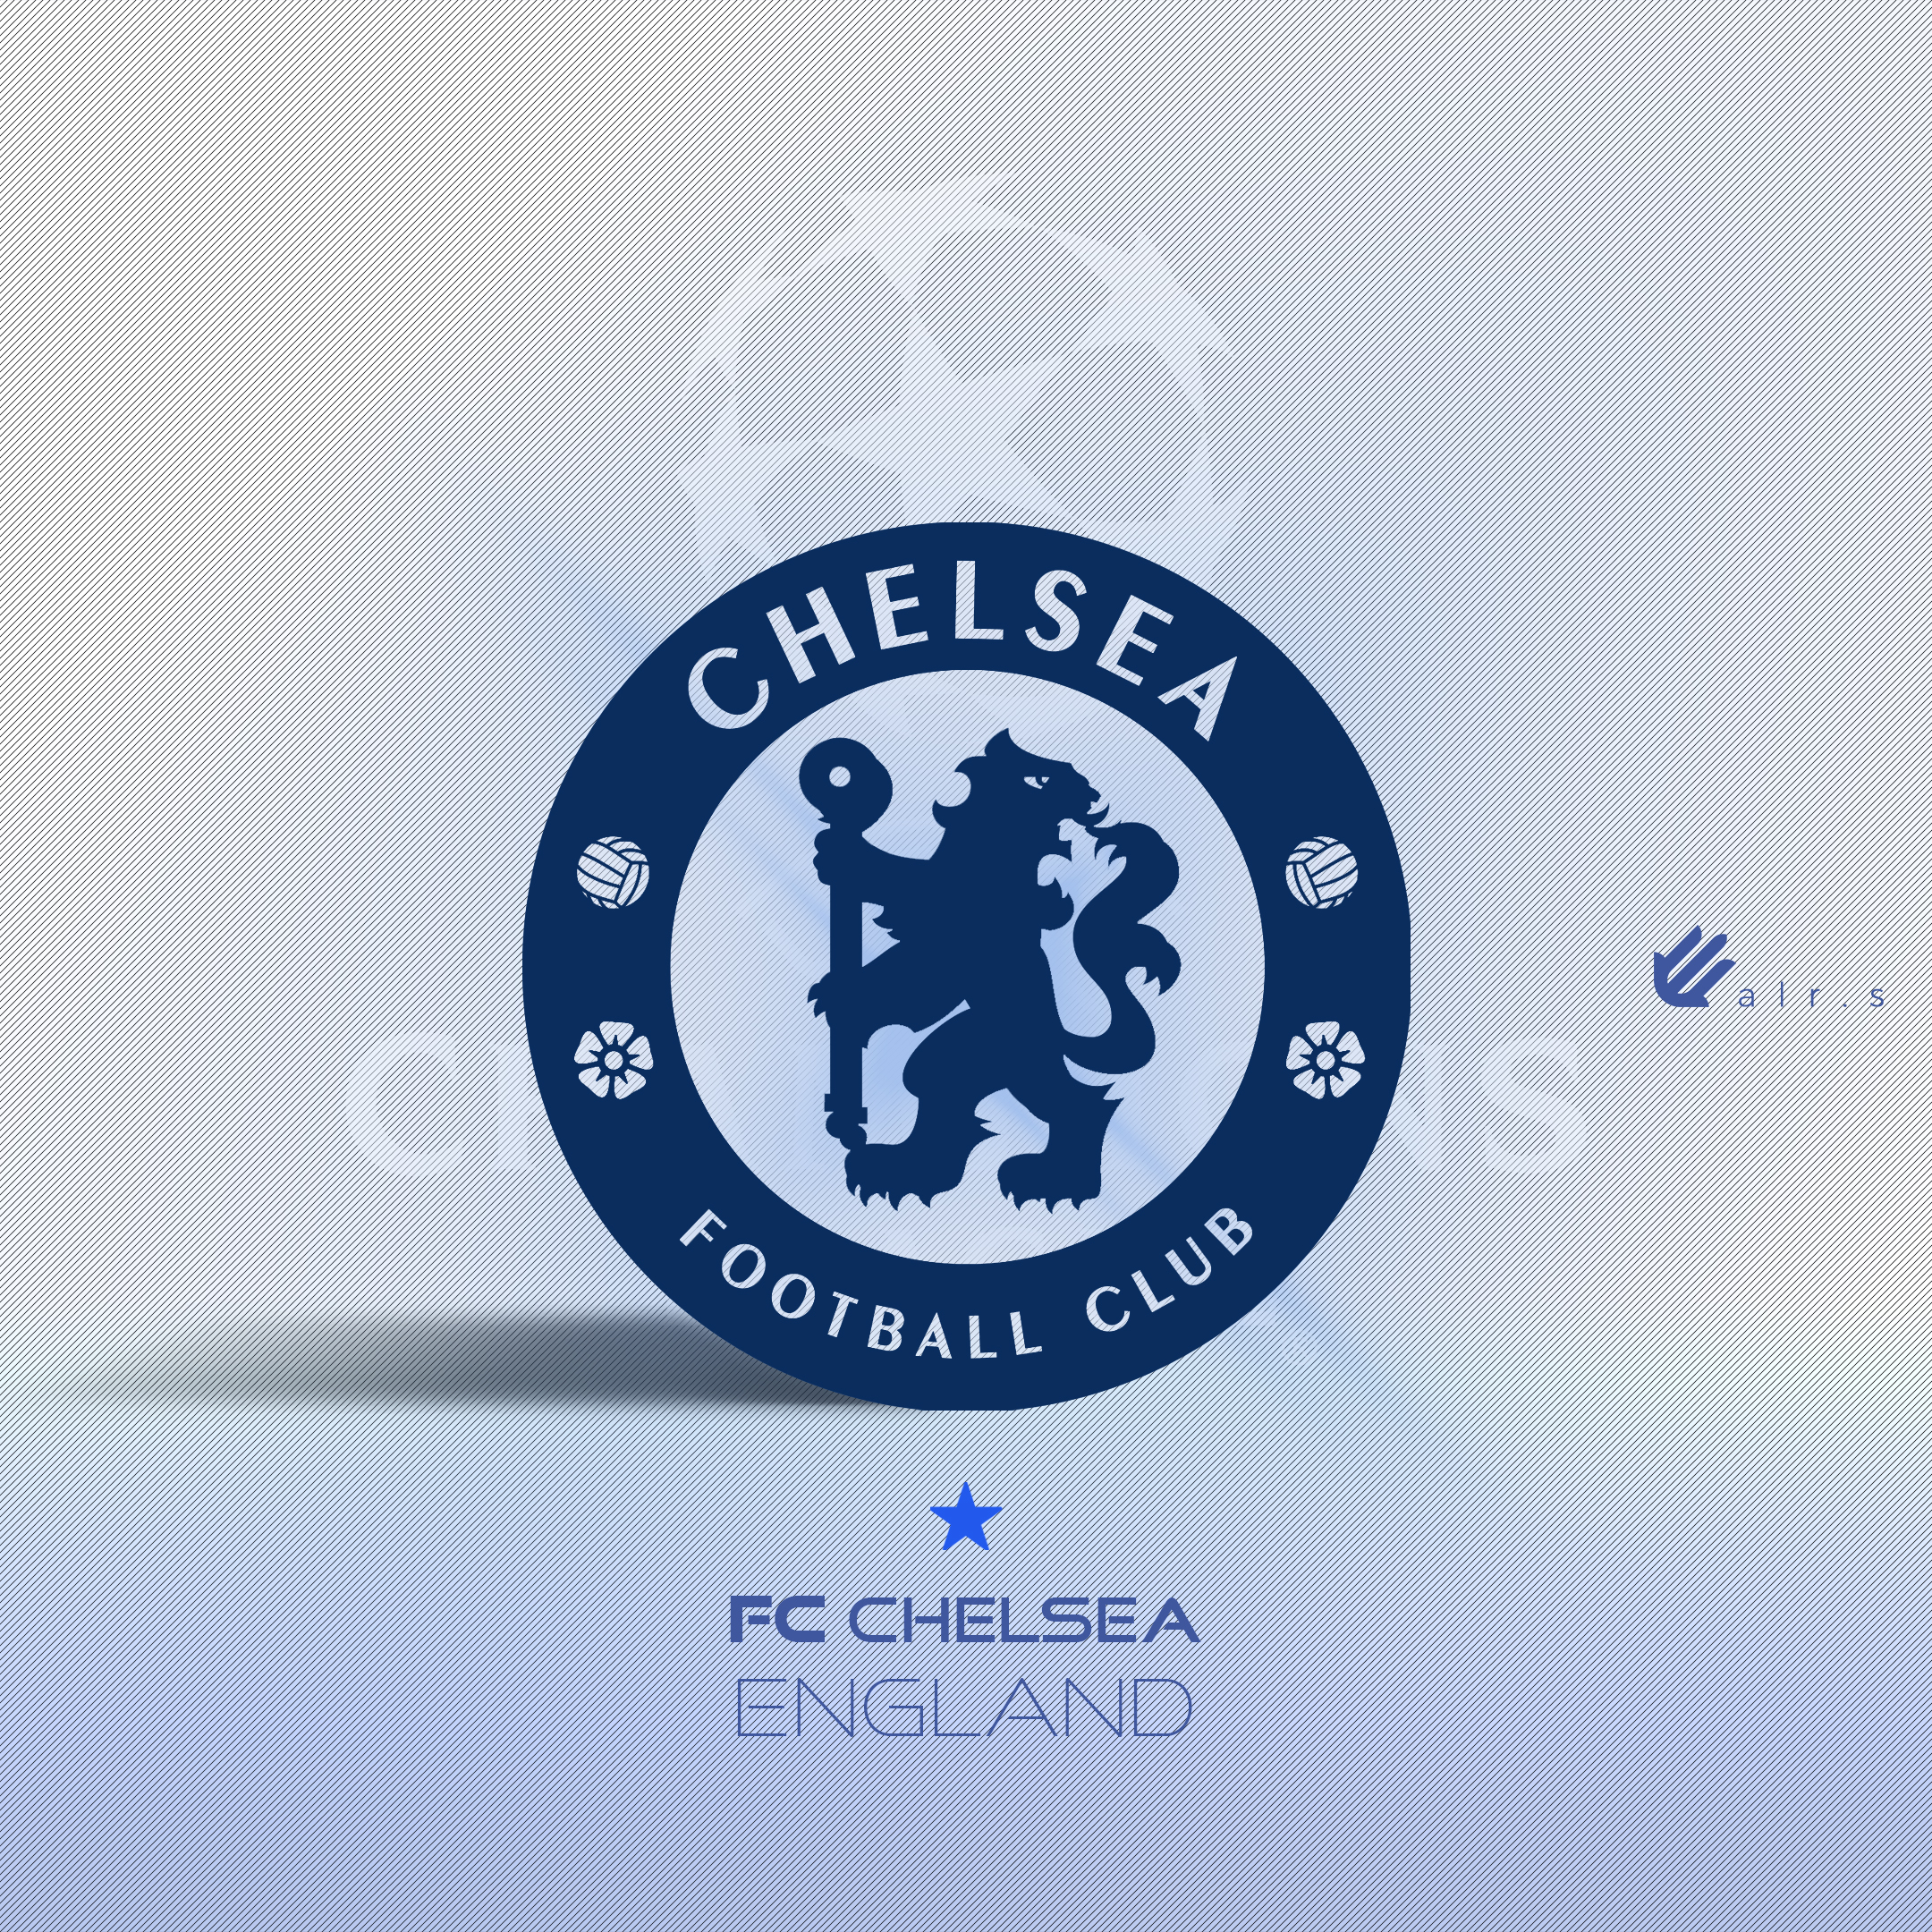 Football , logo, Champions League, clubs, graphic design, creativity ...